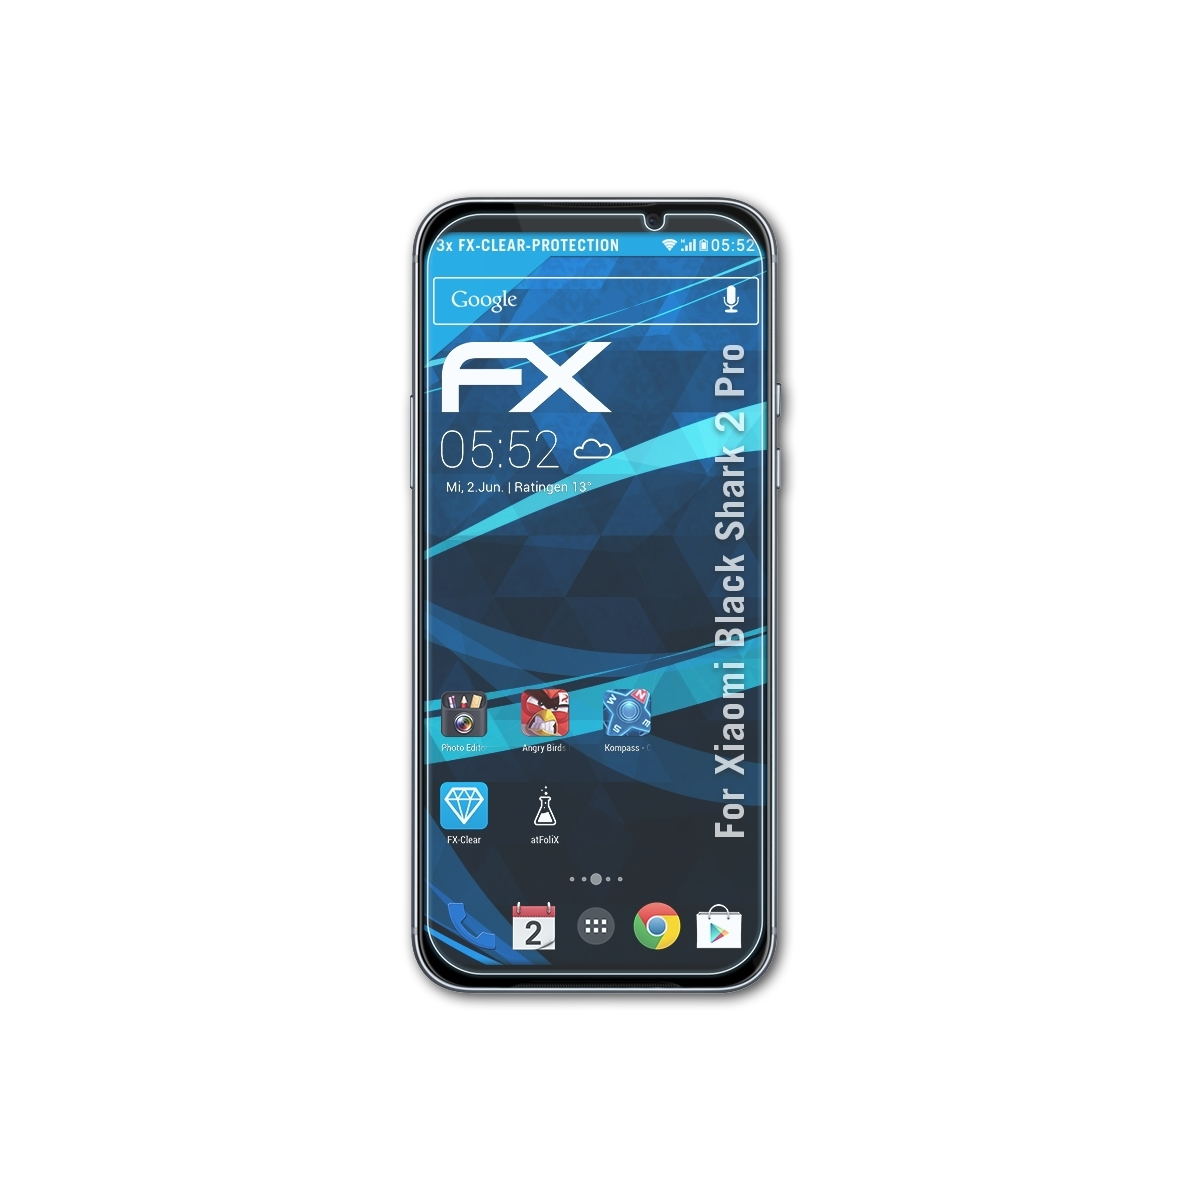 ATFOLIX 3x Shark 2 Xiaomi FX-Clear Displayschutz(für Pro) Black